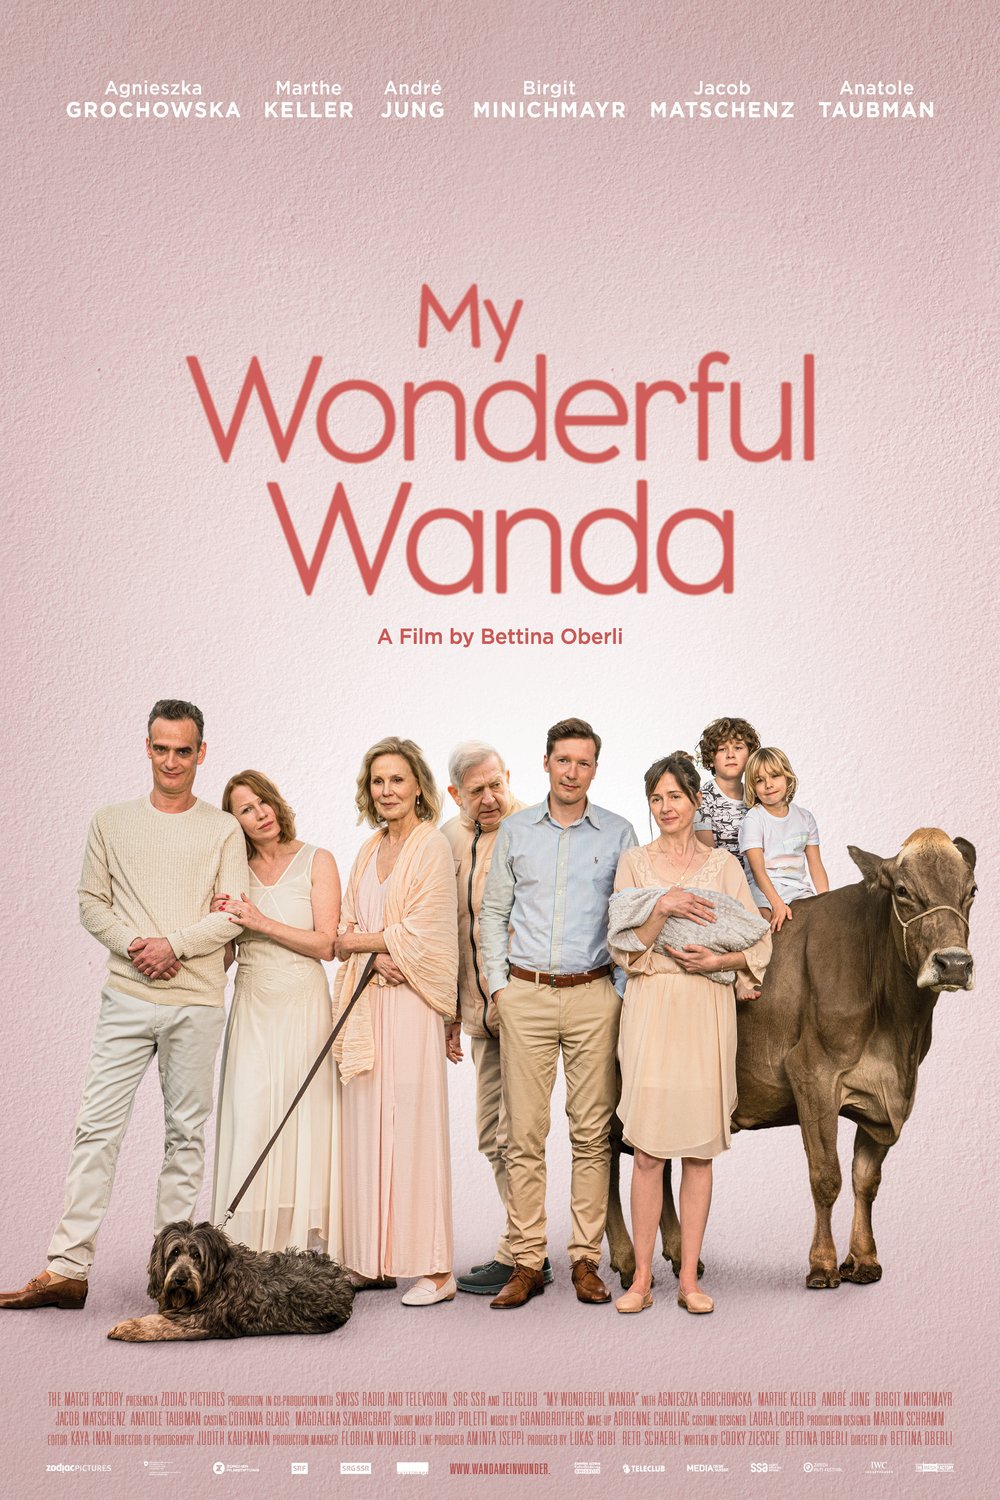 Poster of the movie My Wonderful Wanda